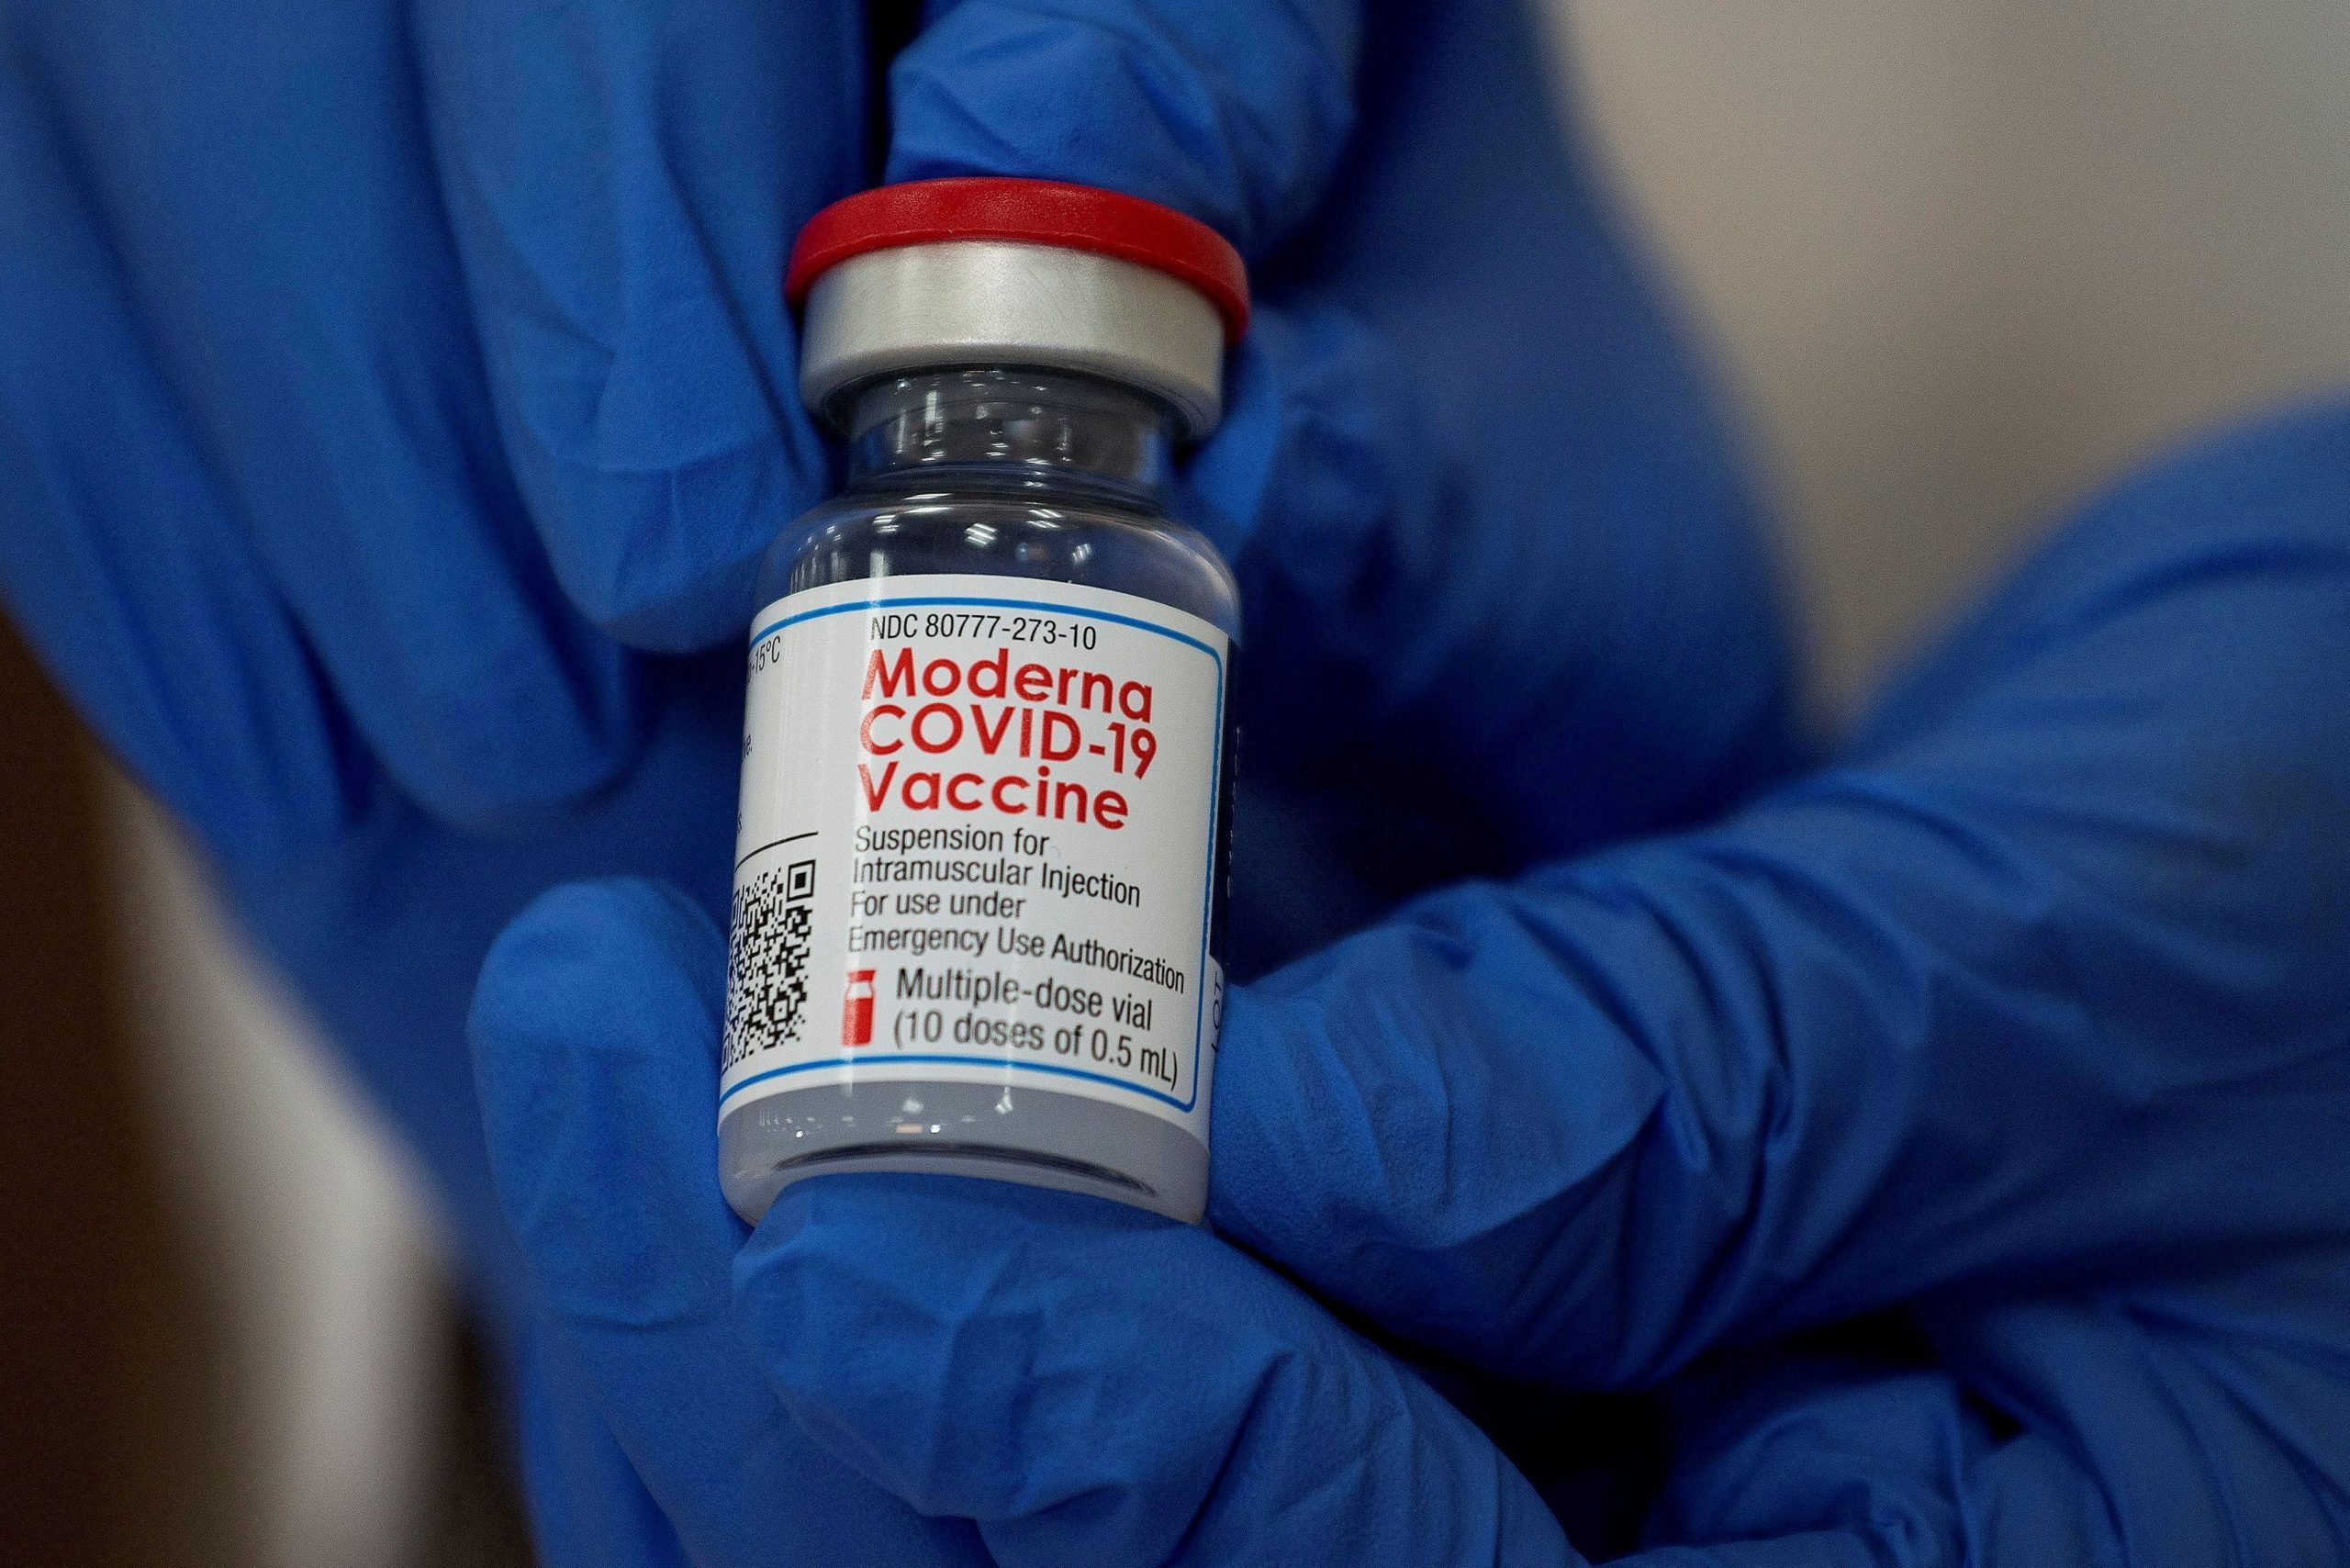 FILE PHOTO: An employee shows the Moderna COVID-19 vaccine at Northwell Health's Long Island Jewish Valley Stream hospital in New York, U.S., December 21, 2020.   REUTERS/Eduardo Munoz/File Photo